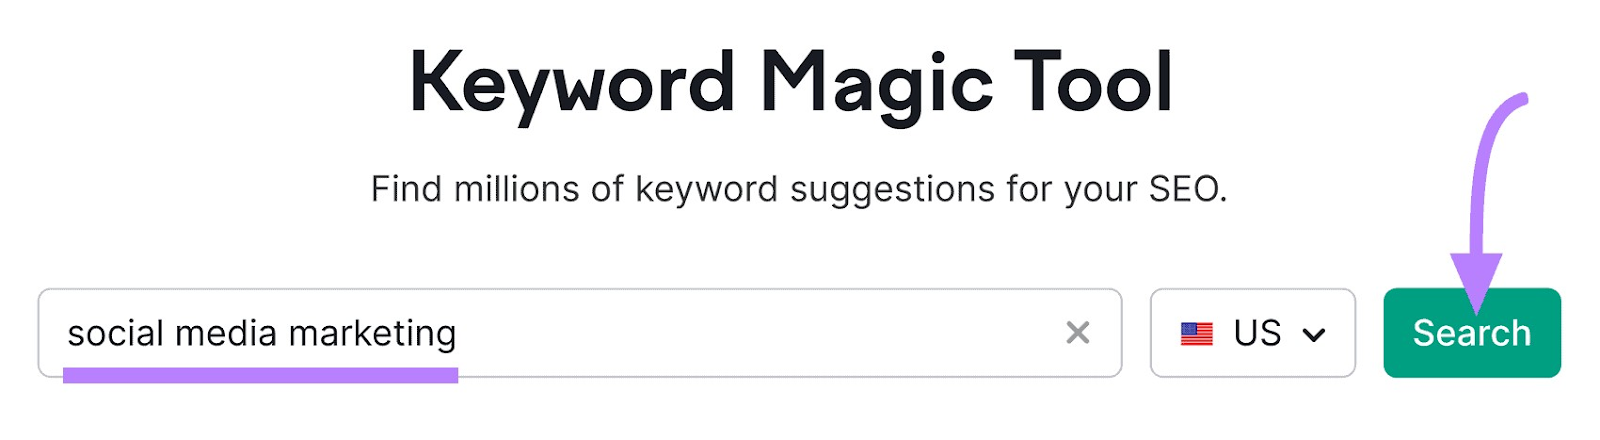 "social media marketing" entered into the Keyword Magic Tool search bar